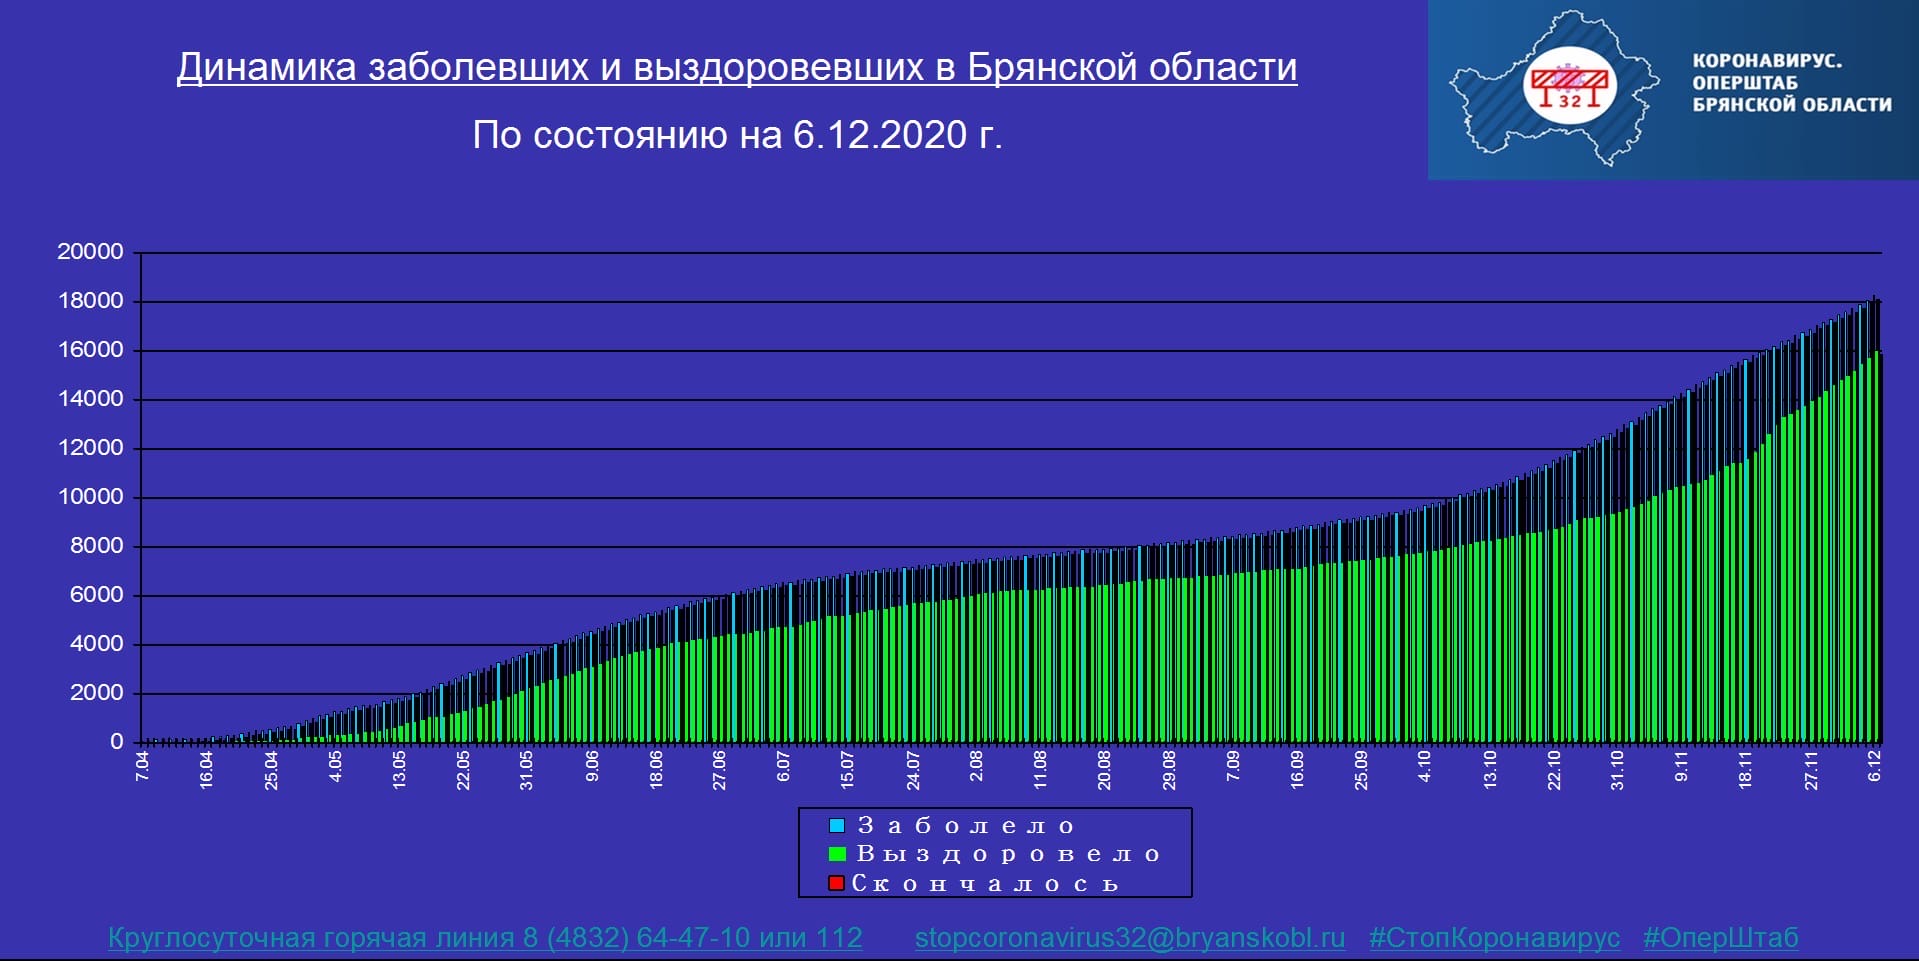 Коронавирус в Брянской области - ситуация на 6 декабря 2020